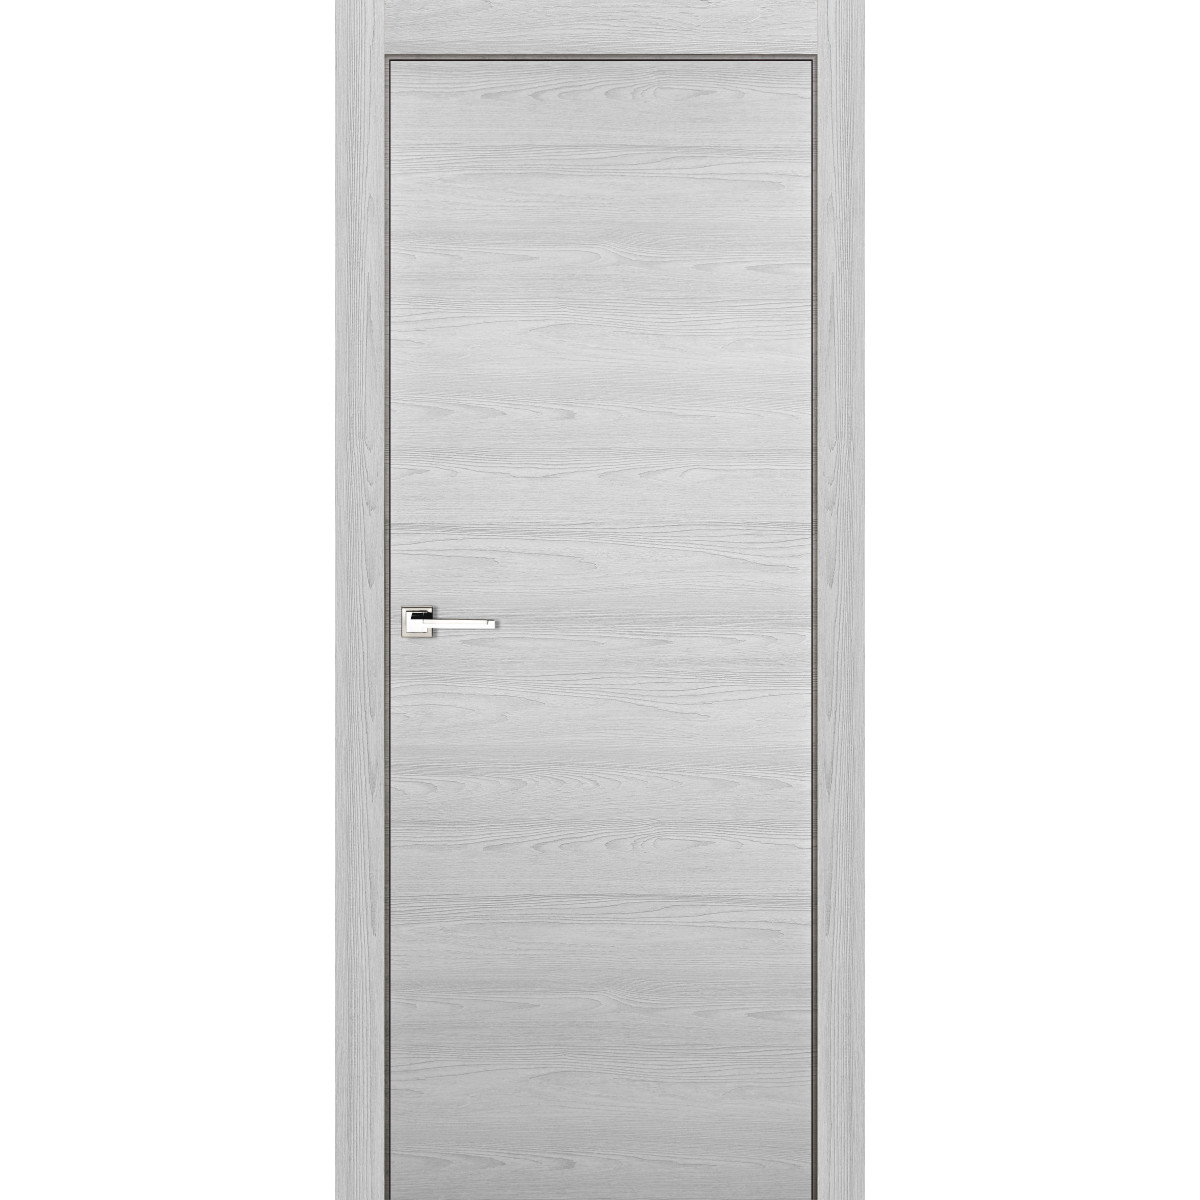 Дверь межкомнатная глухая 60x200 см, ламинация, цвет ясень серый